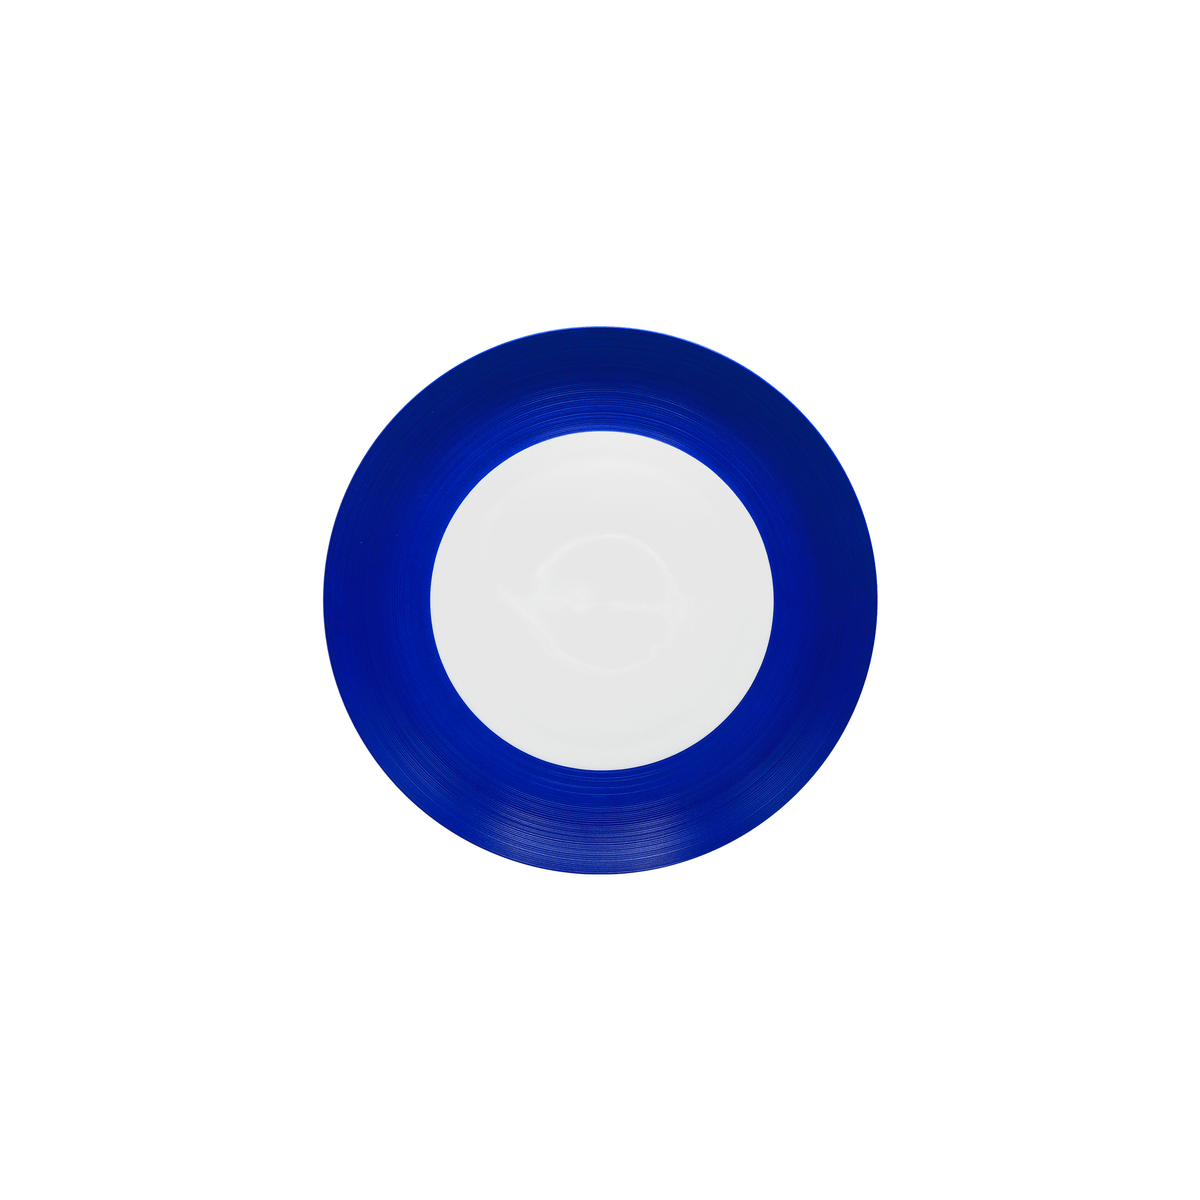 HEMISPHERE Royal Blue - Flat round dish, mini